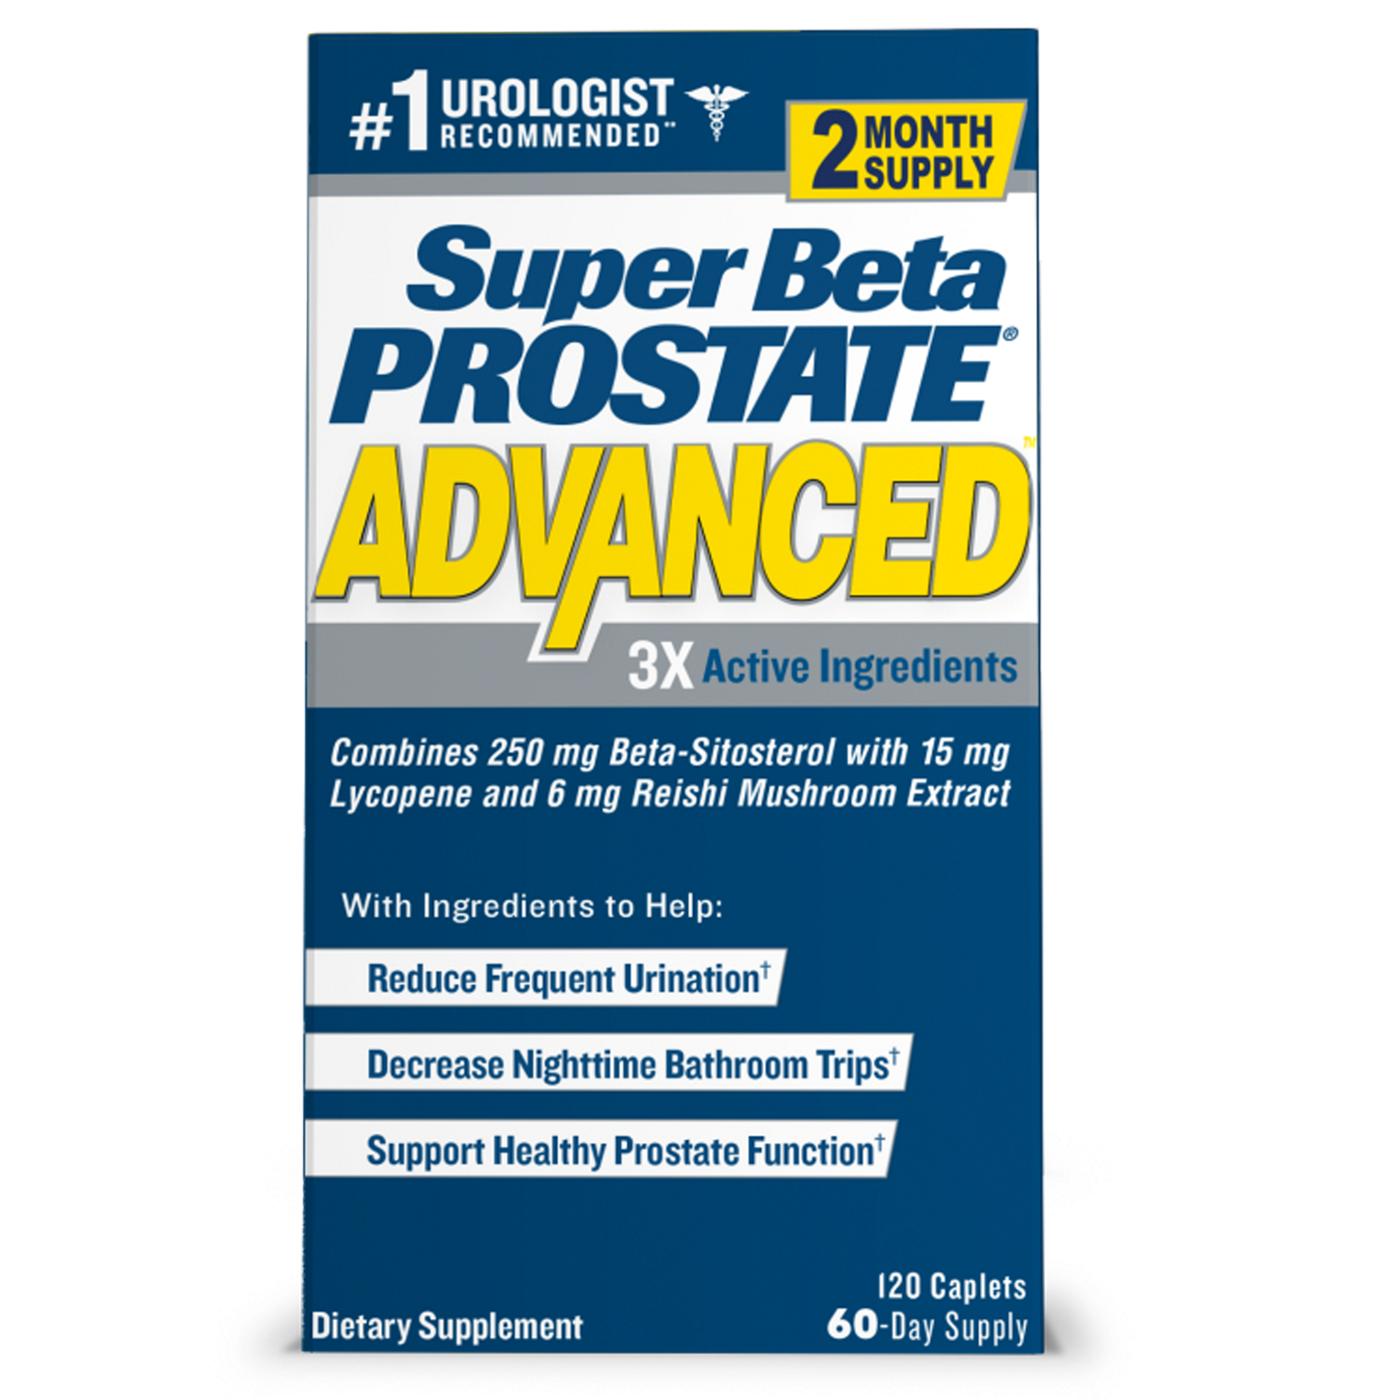 New Vitality Super Beta Prostate Advanced Supplement; image 1 of 2